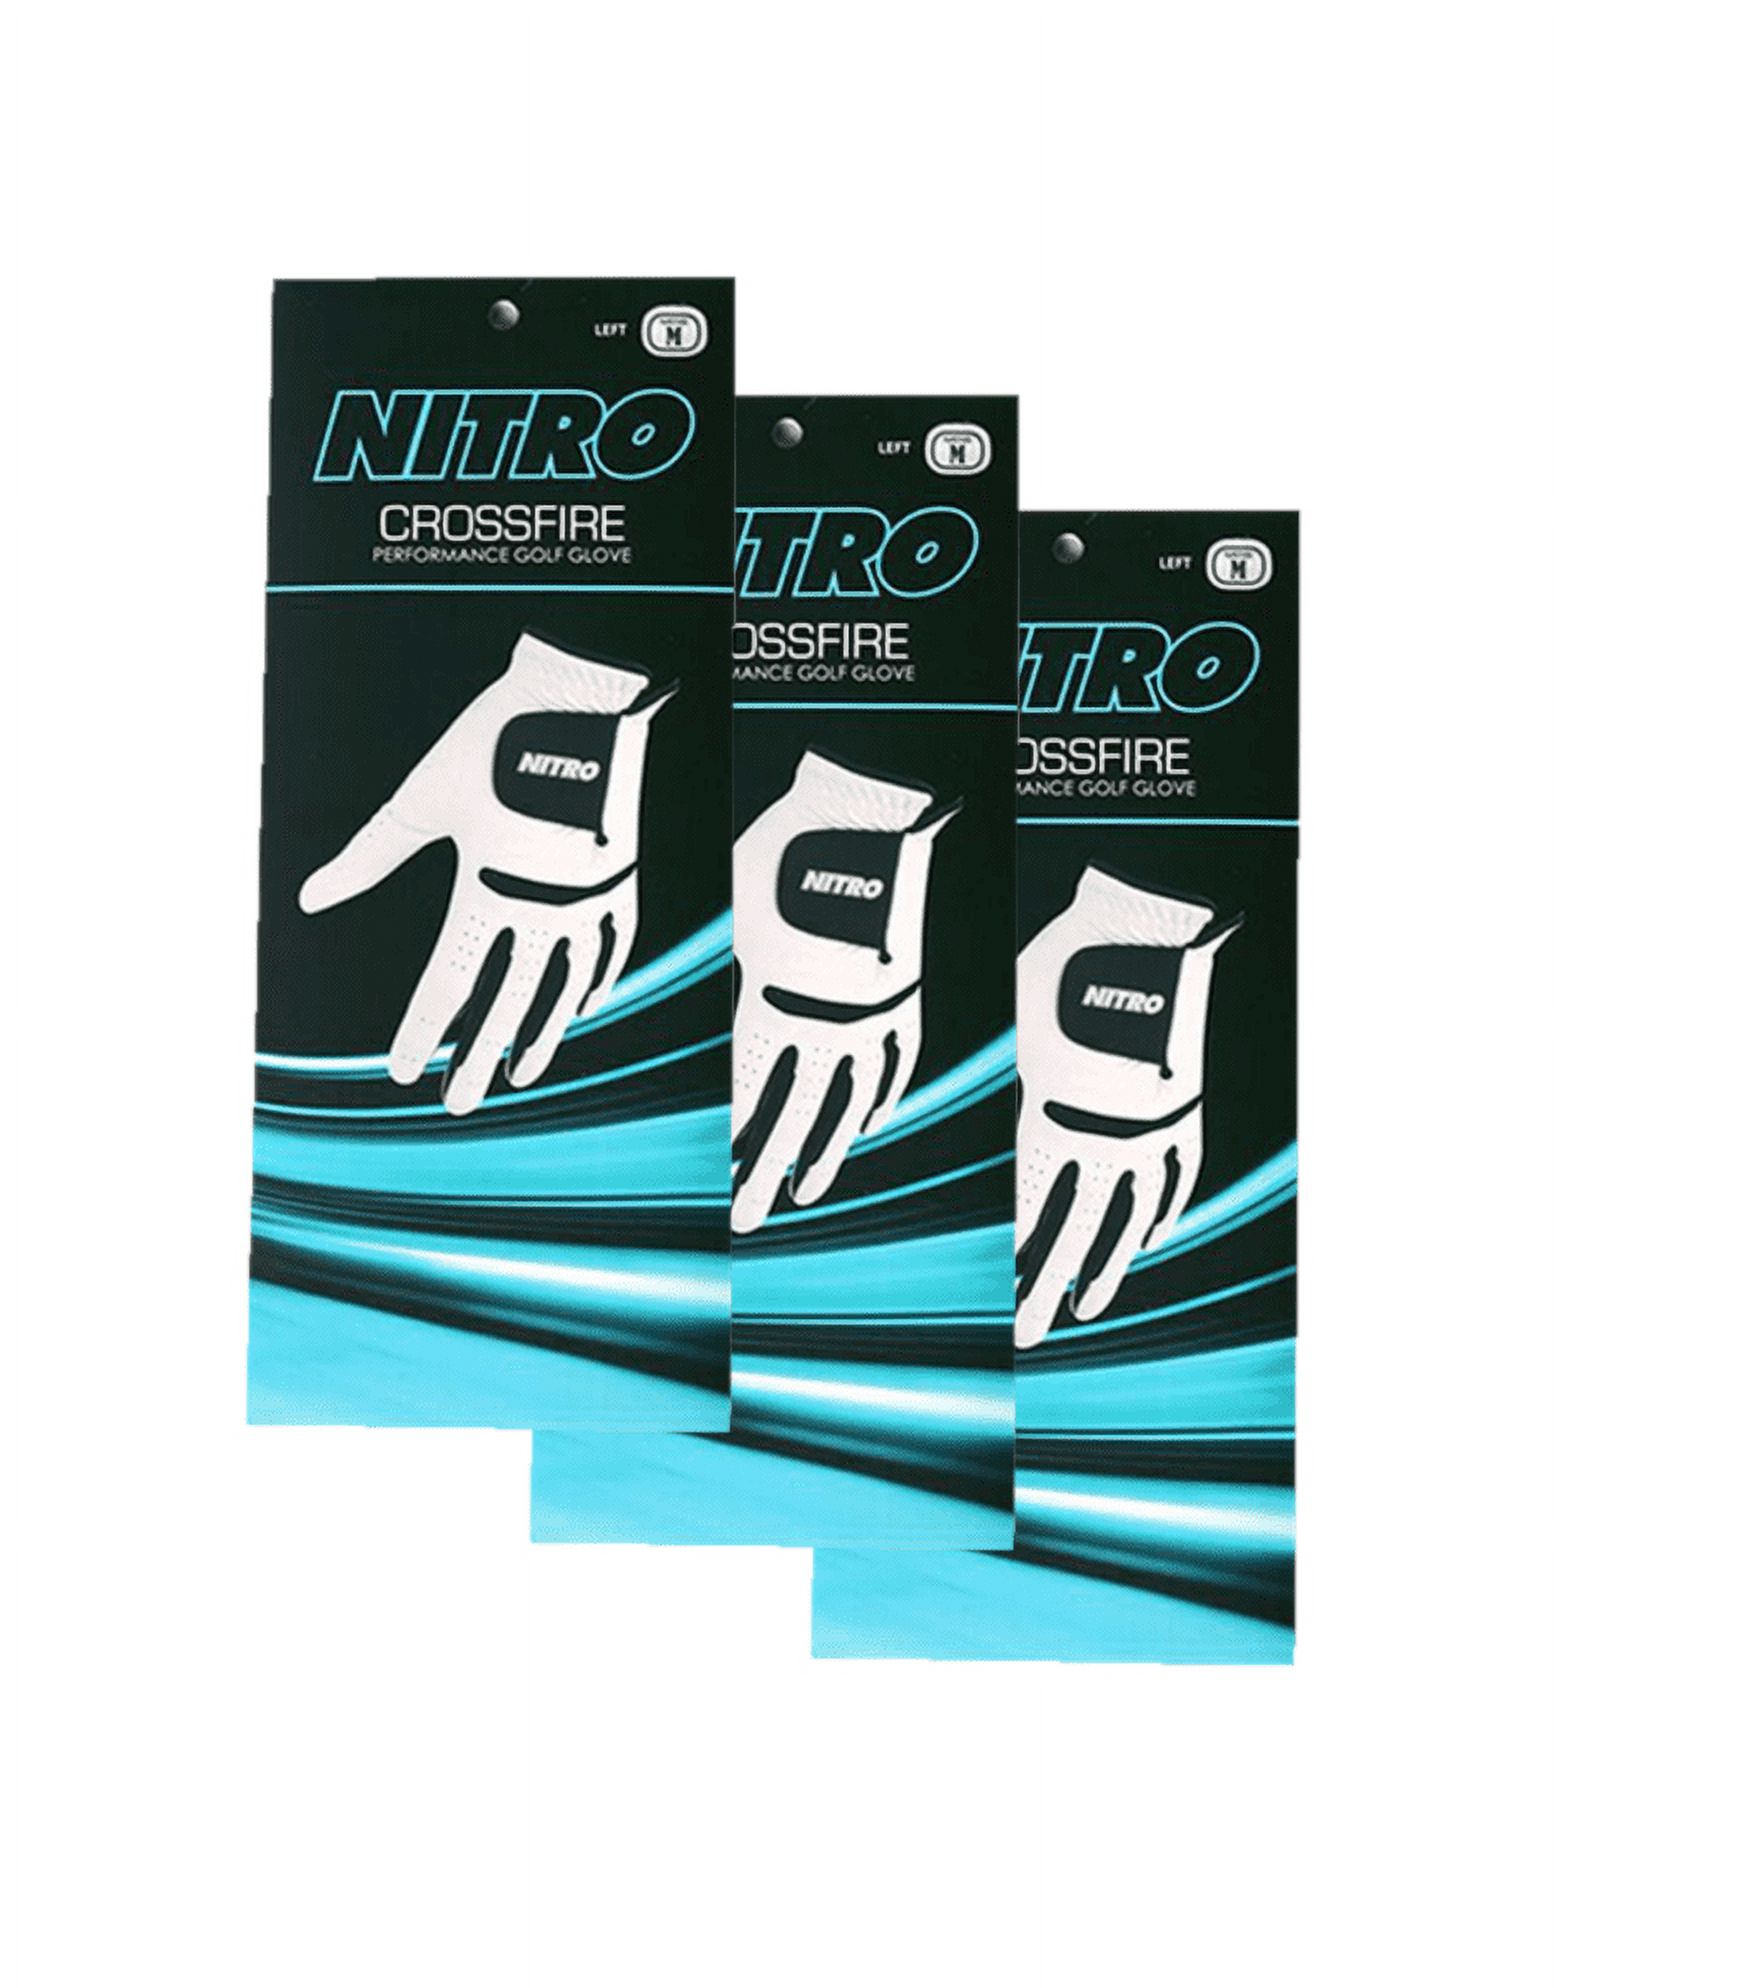 NITRO CROSSFIRE PERFORMANCE GOLF GLOVE MENS WHITE/BLACK EXTRA LARGE 3 Pk Gloves - image 2 of 2